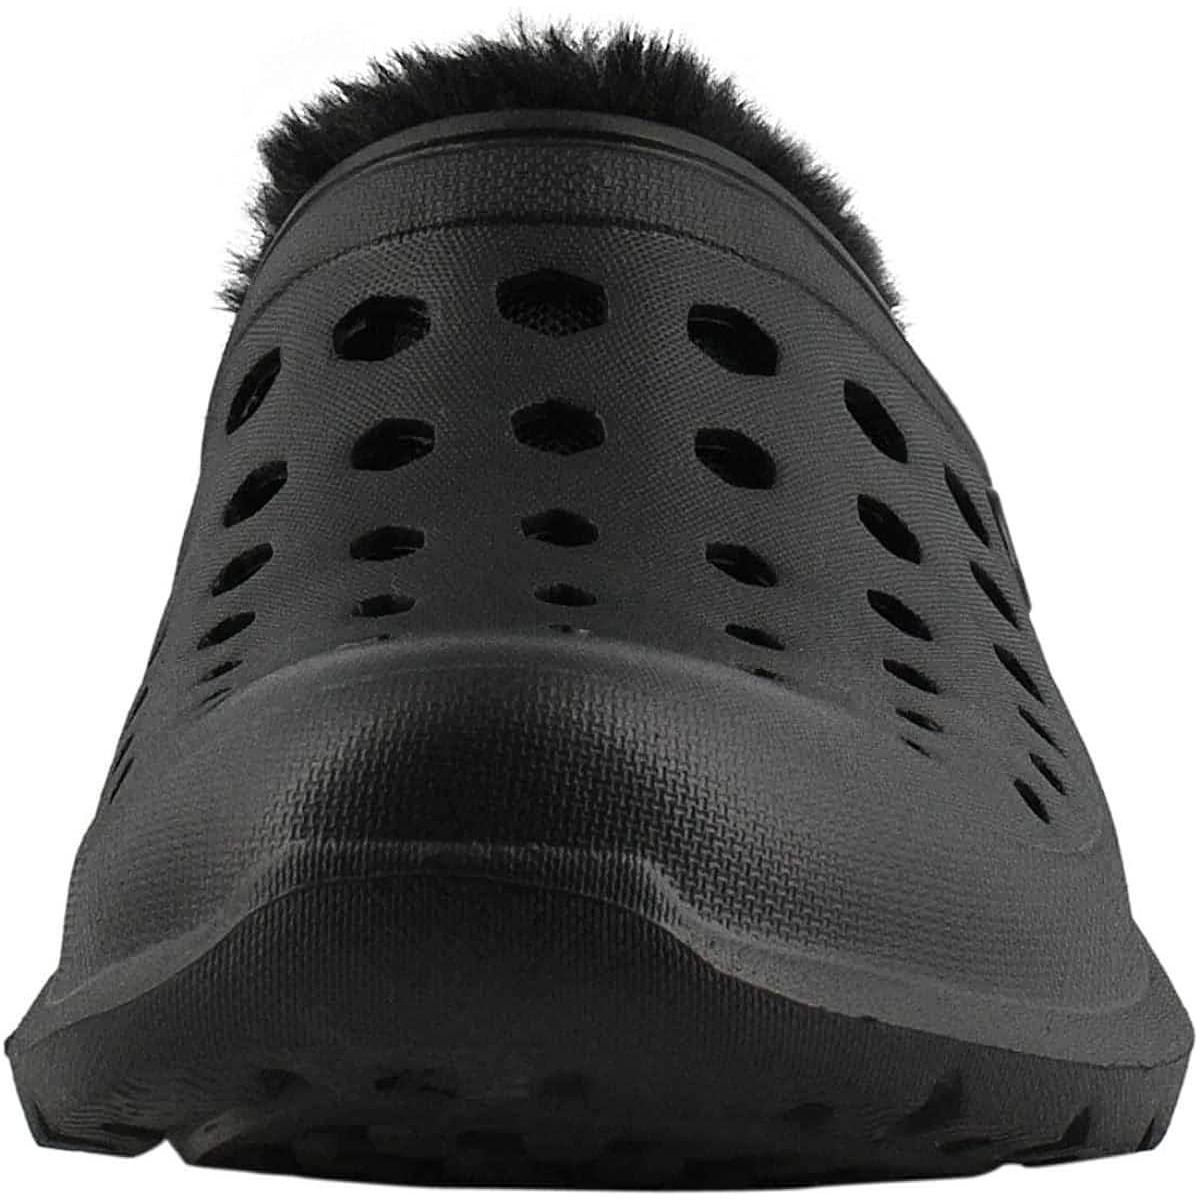 Joybees Clog Shoe Size 8 Women's Cozy Faux Fur Lined Comfort Slip On black